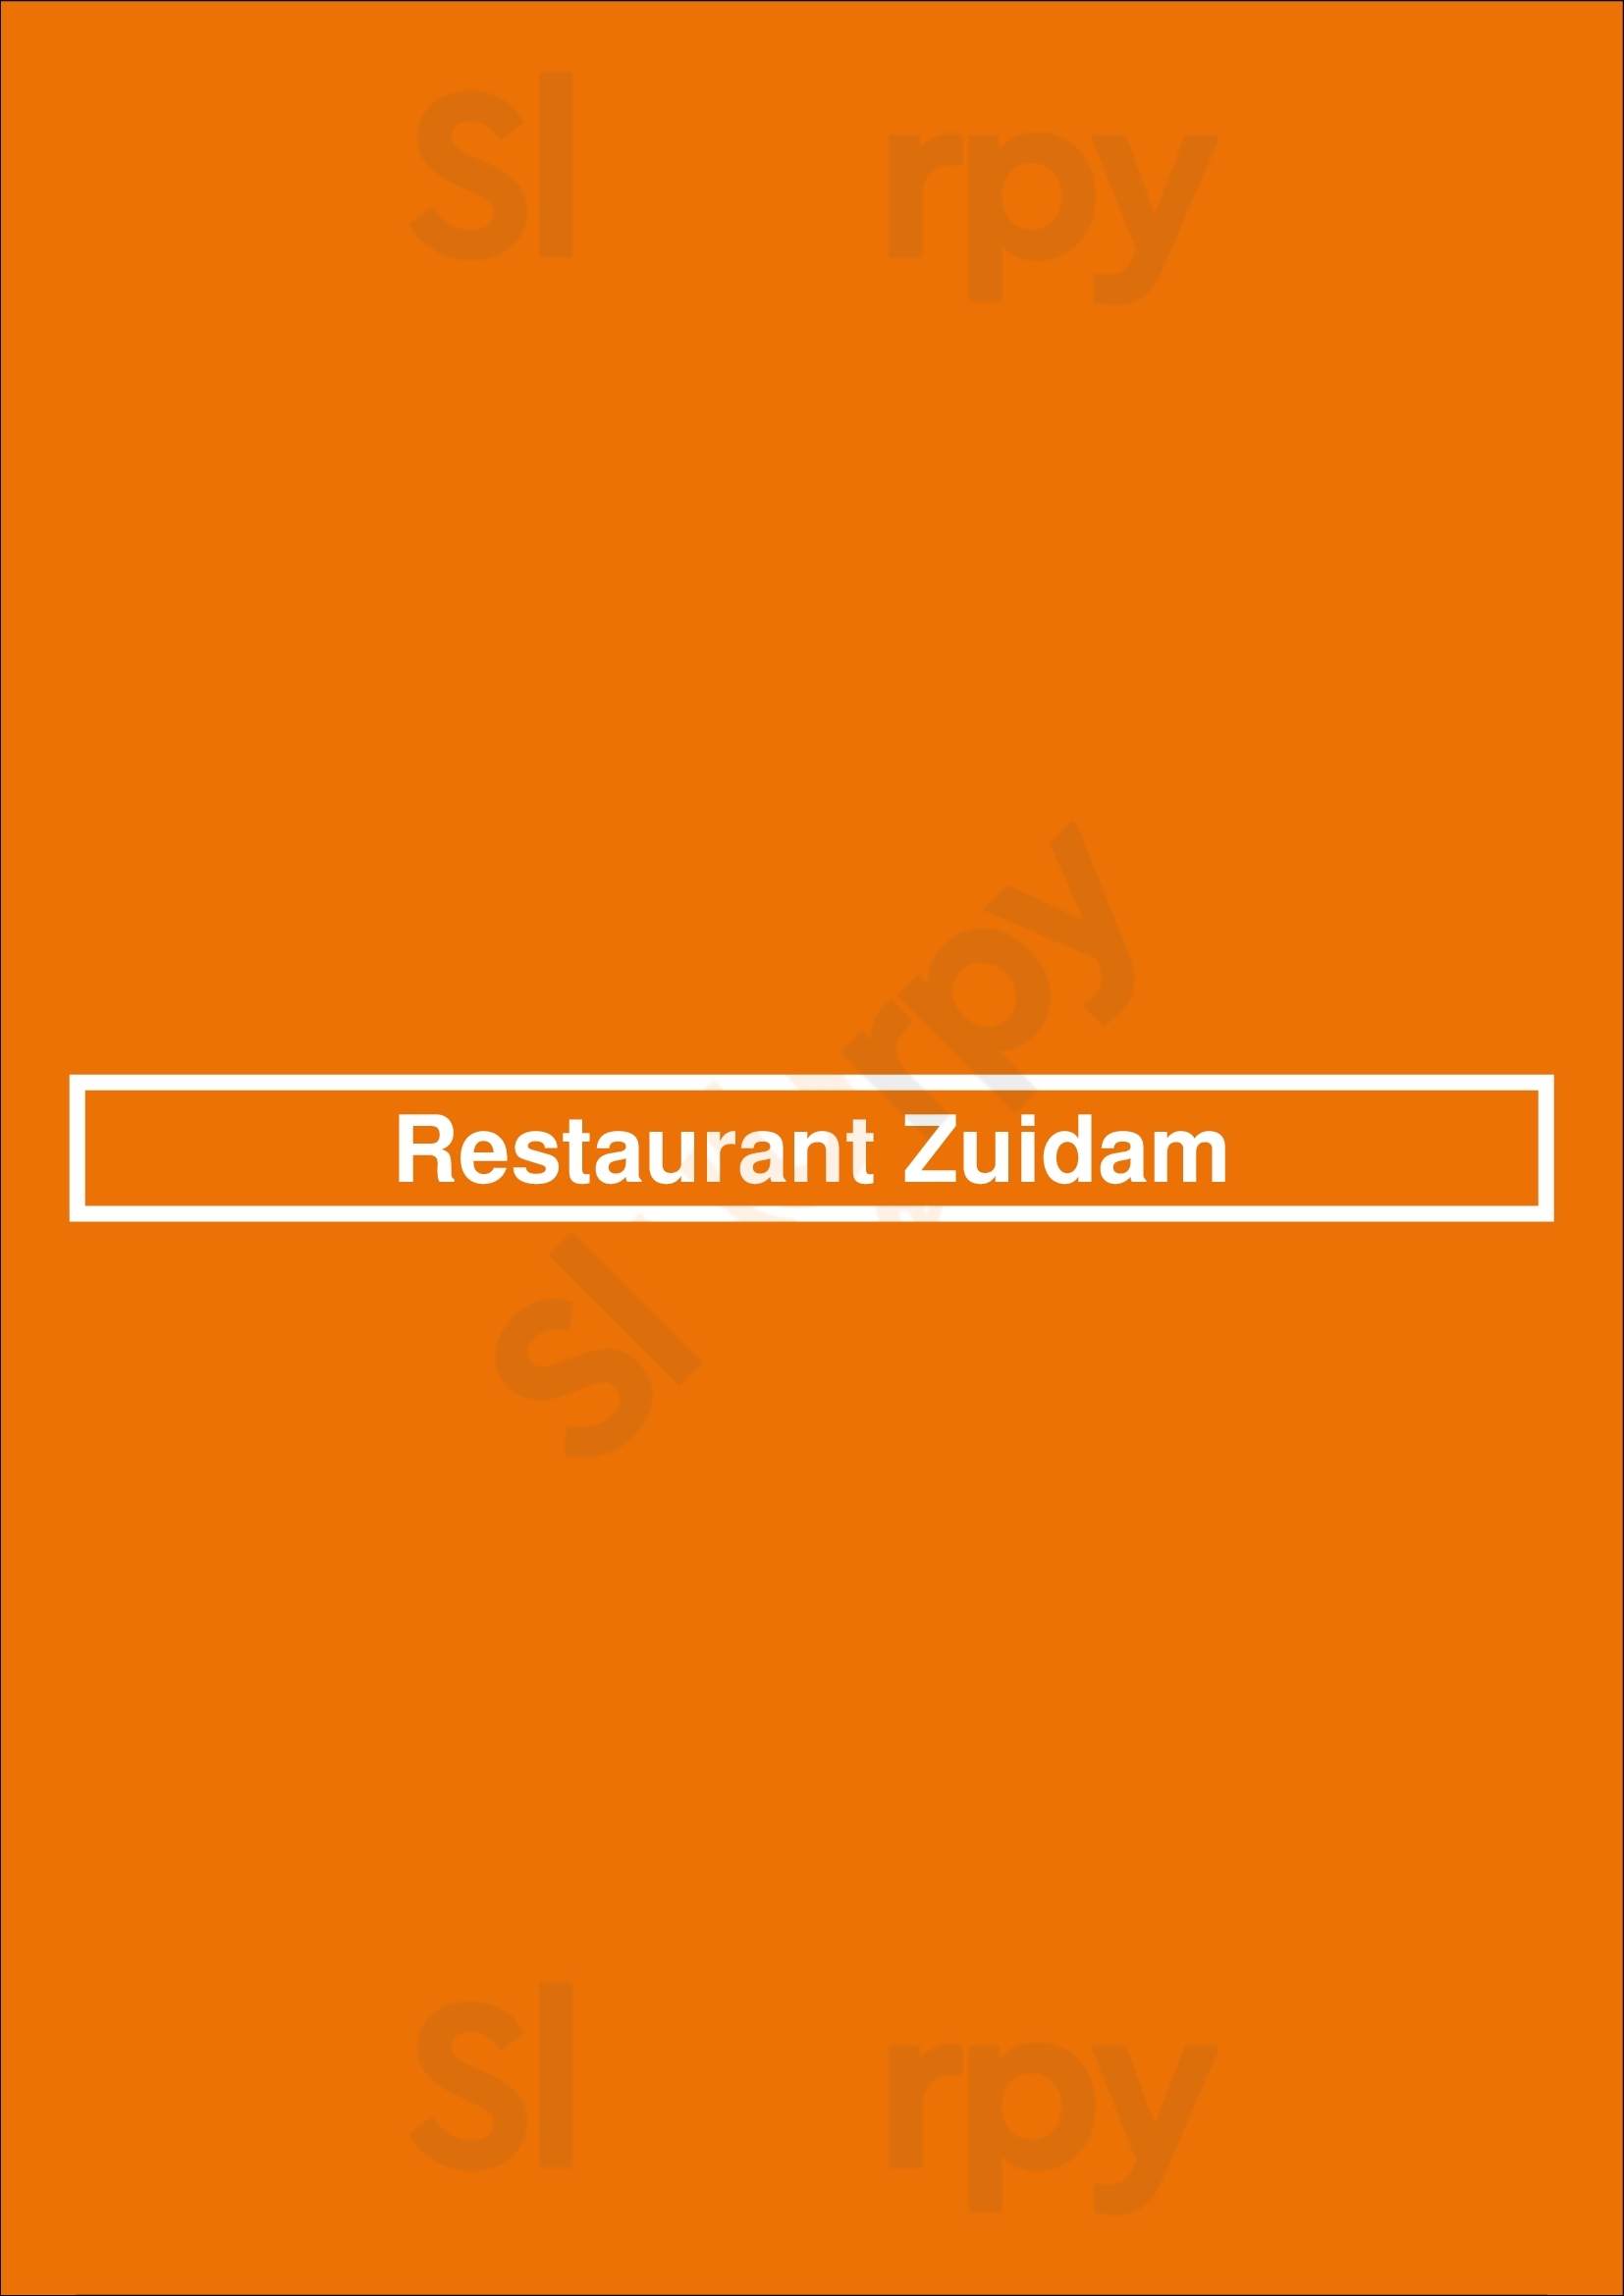 Restaurant Zuidam Haarlem Menu - 1